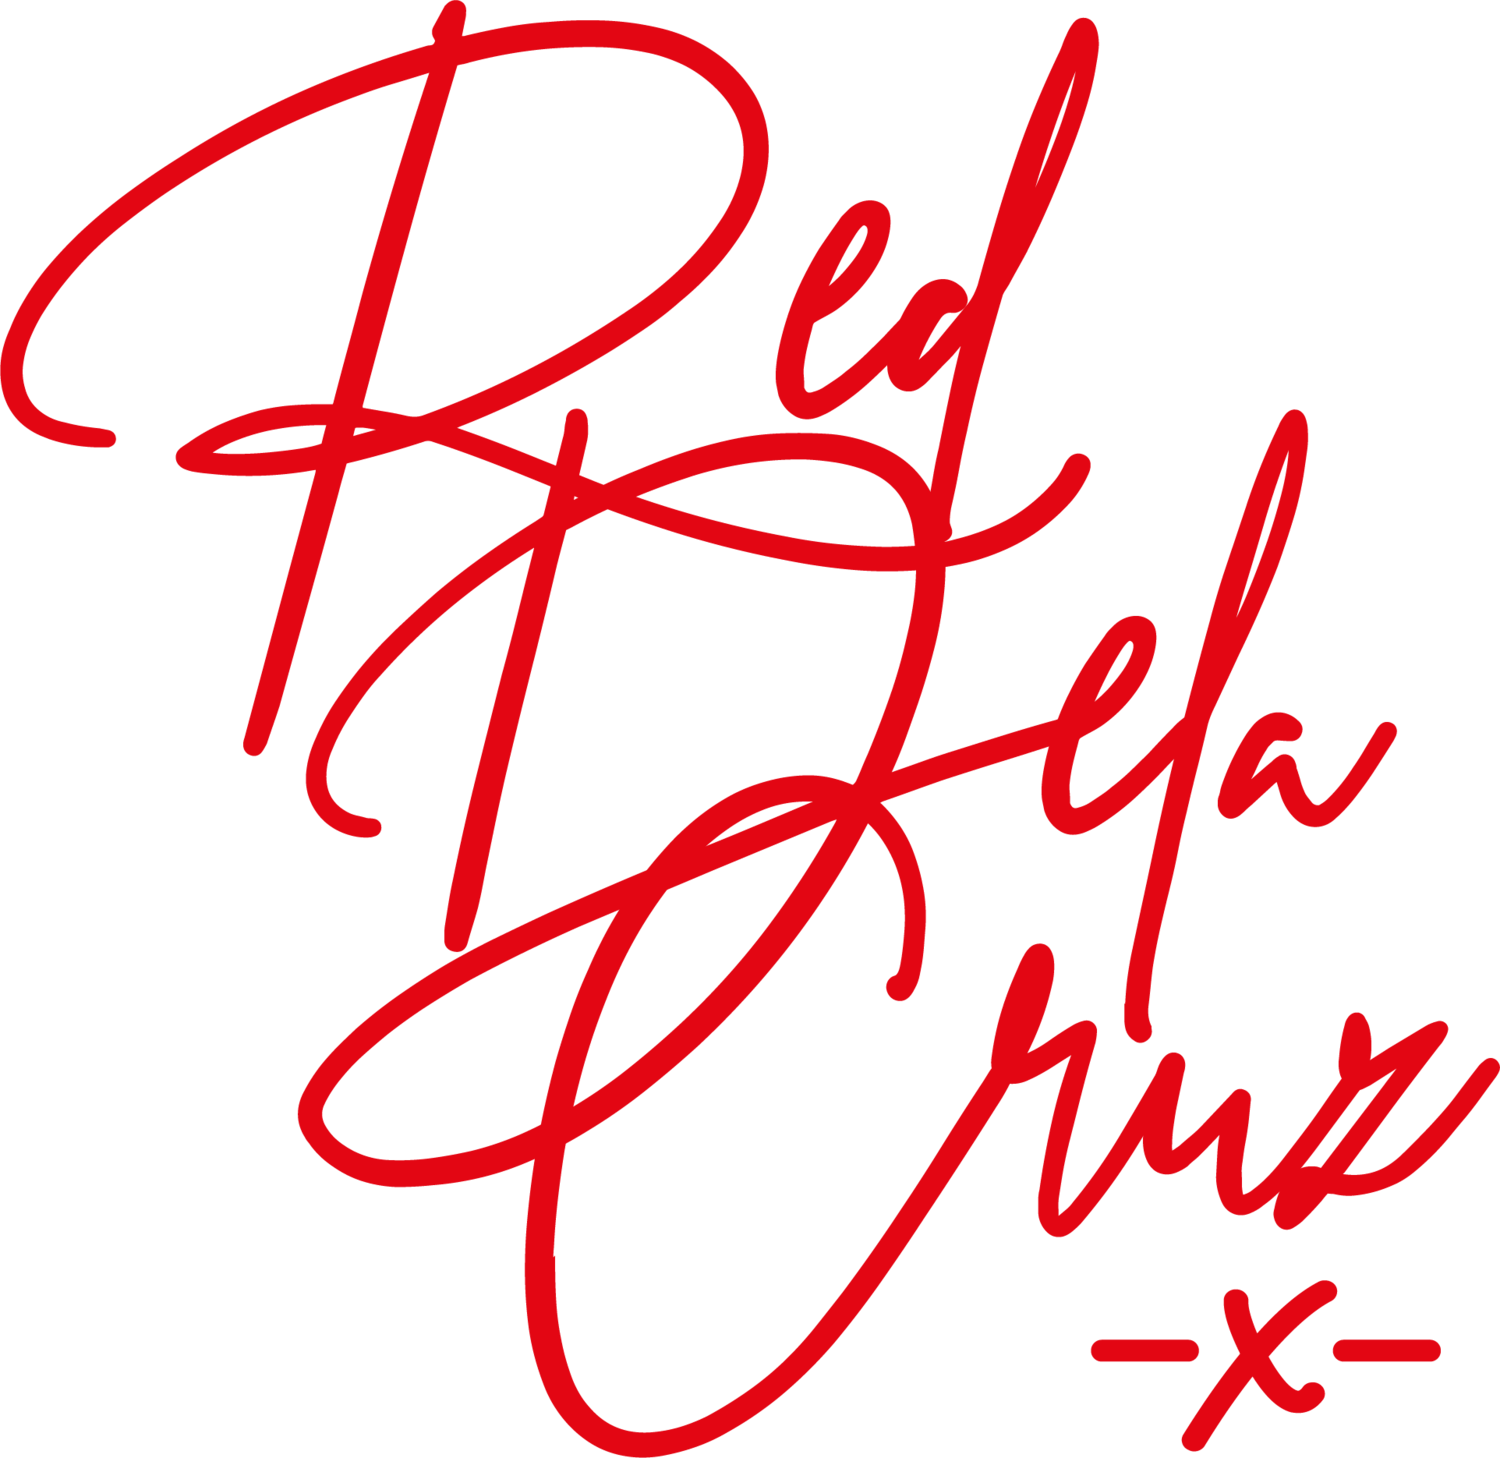 Red Dela Cruz